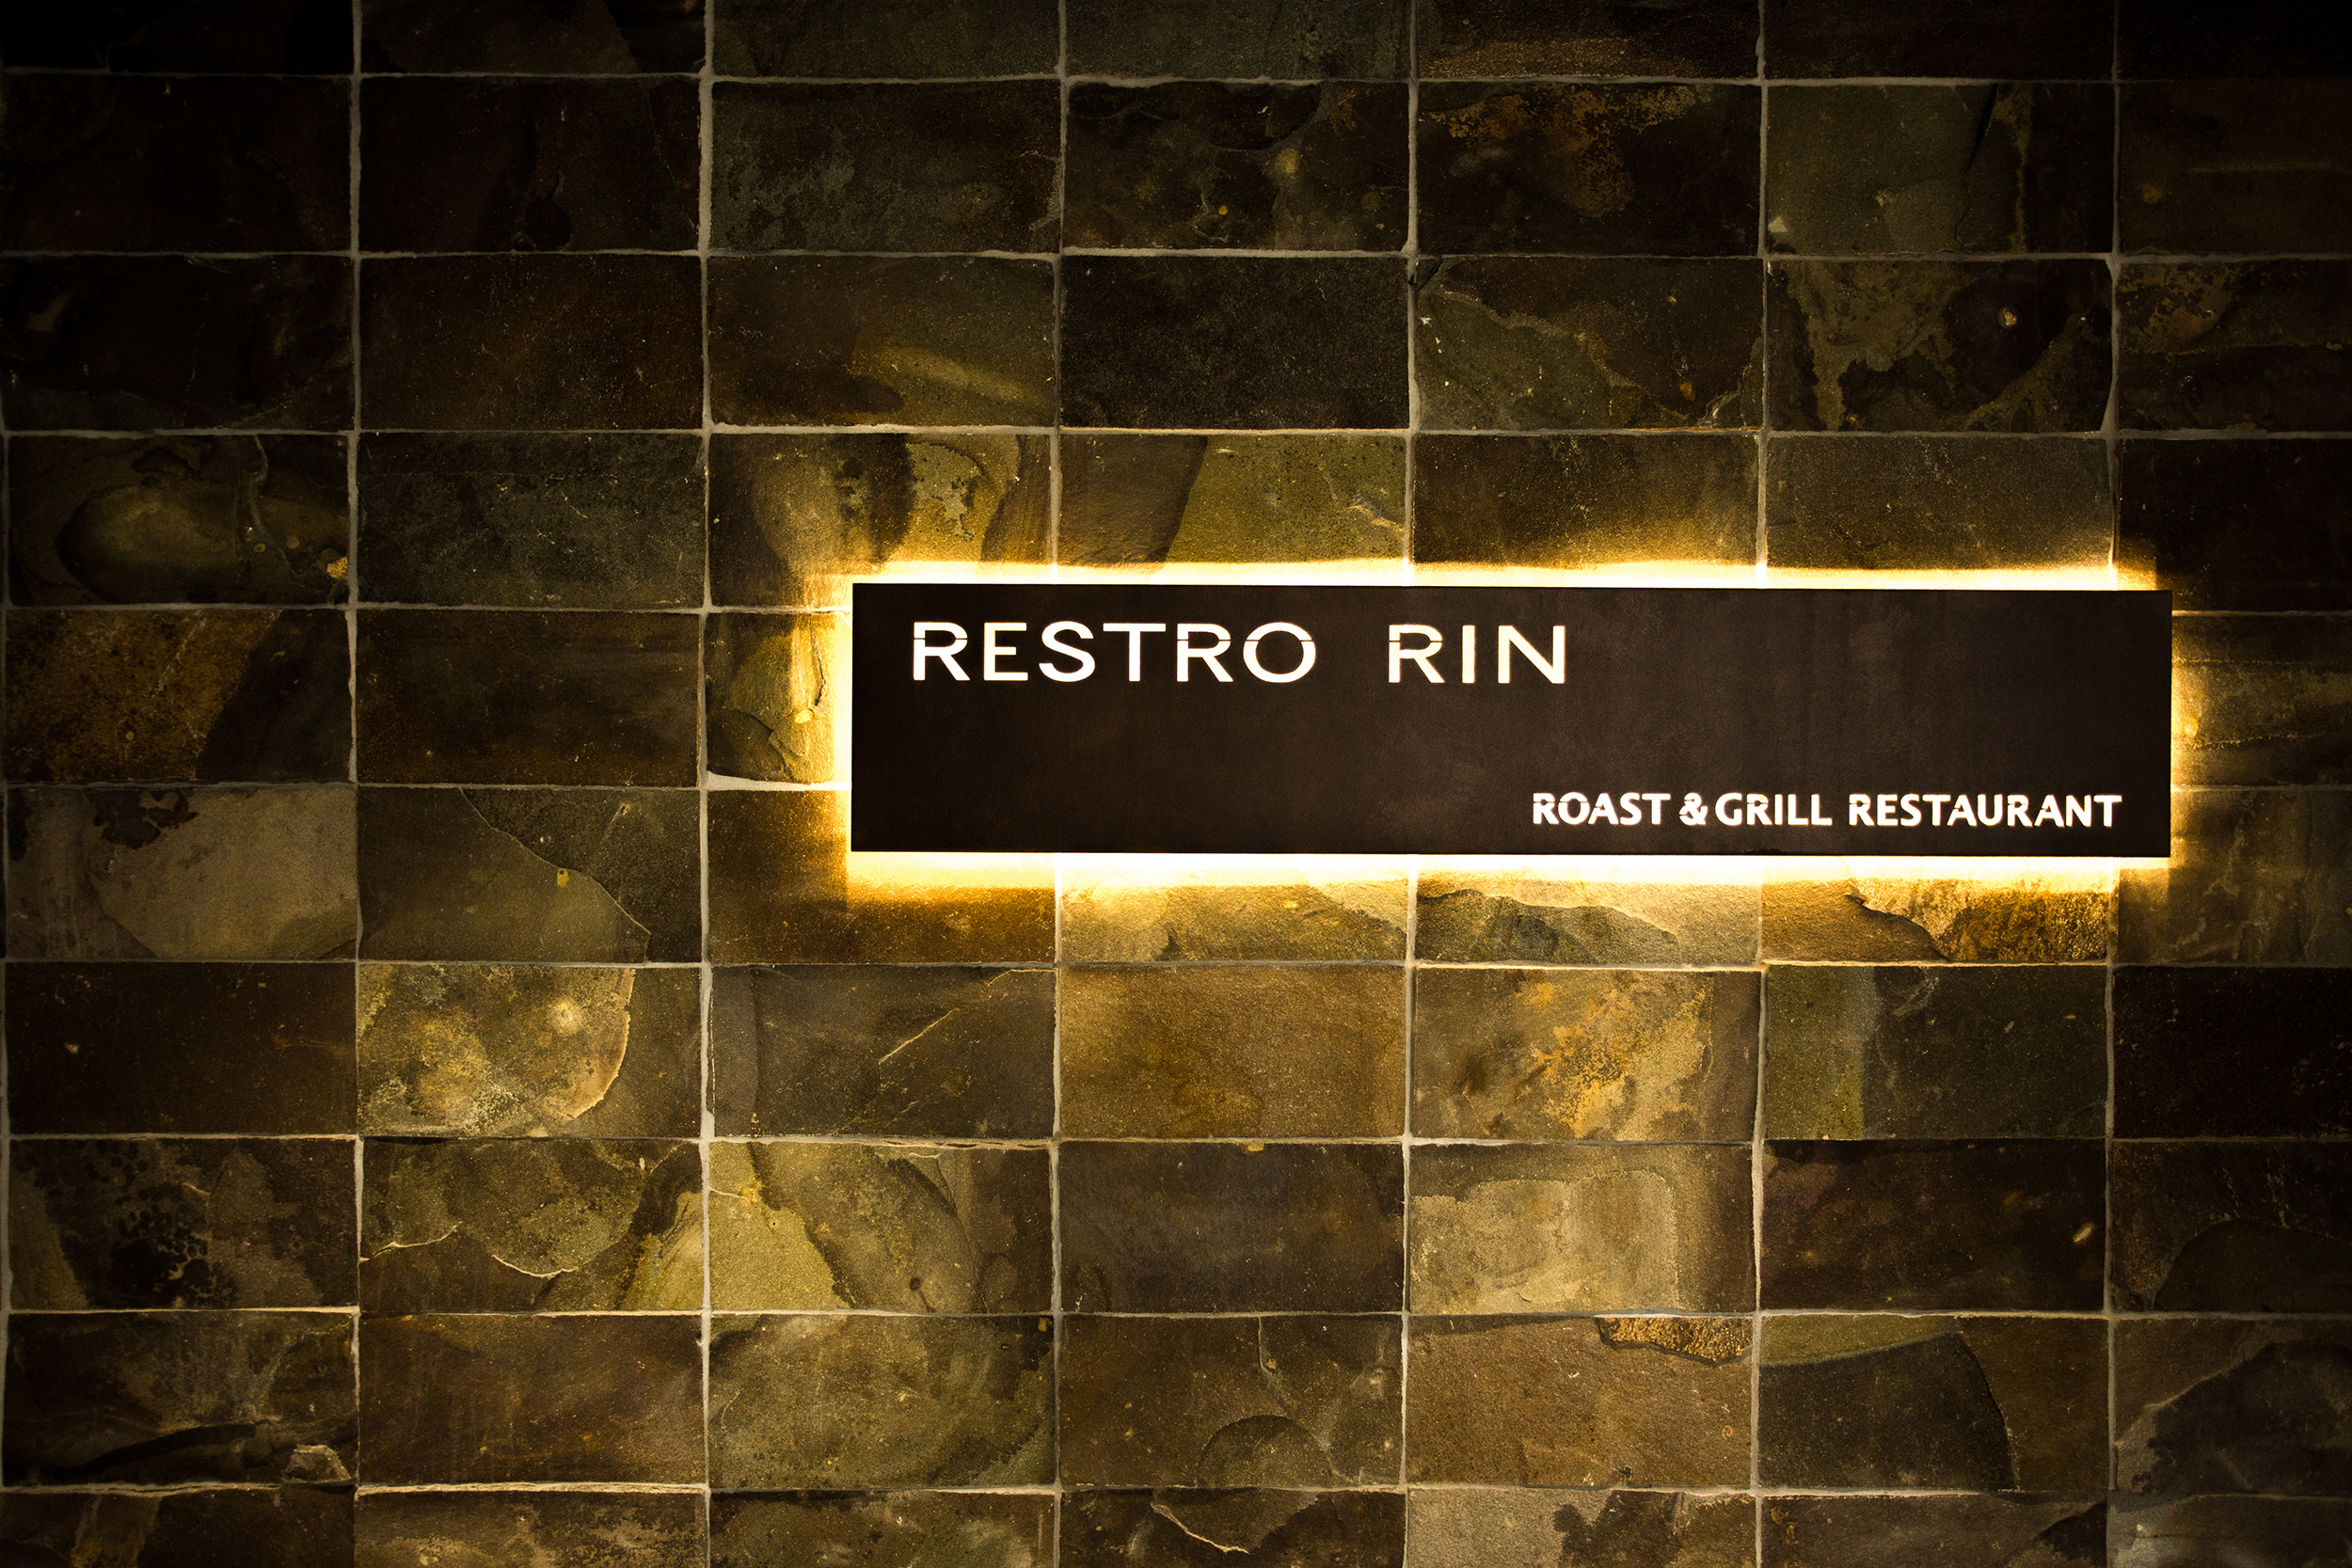 Roast Grill Restaurant Restro Rin レストロリン 長野県松本市のフレンチレストラン Roast Grill Restaurant Restro Rin レストロリン